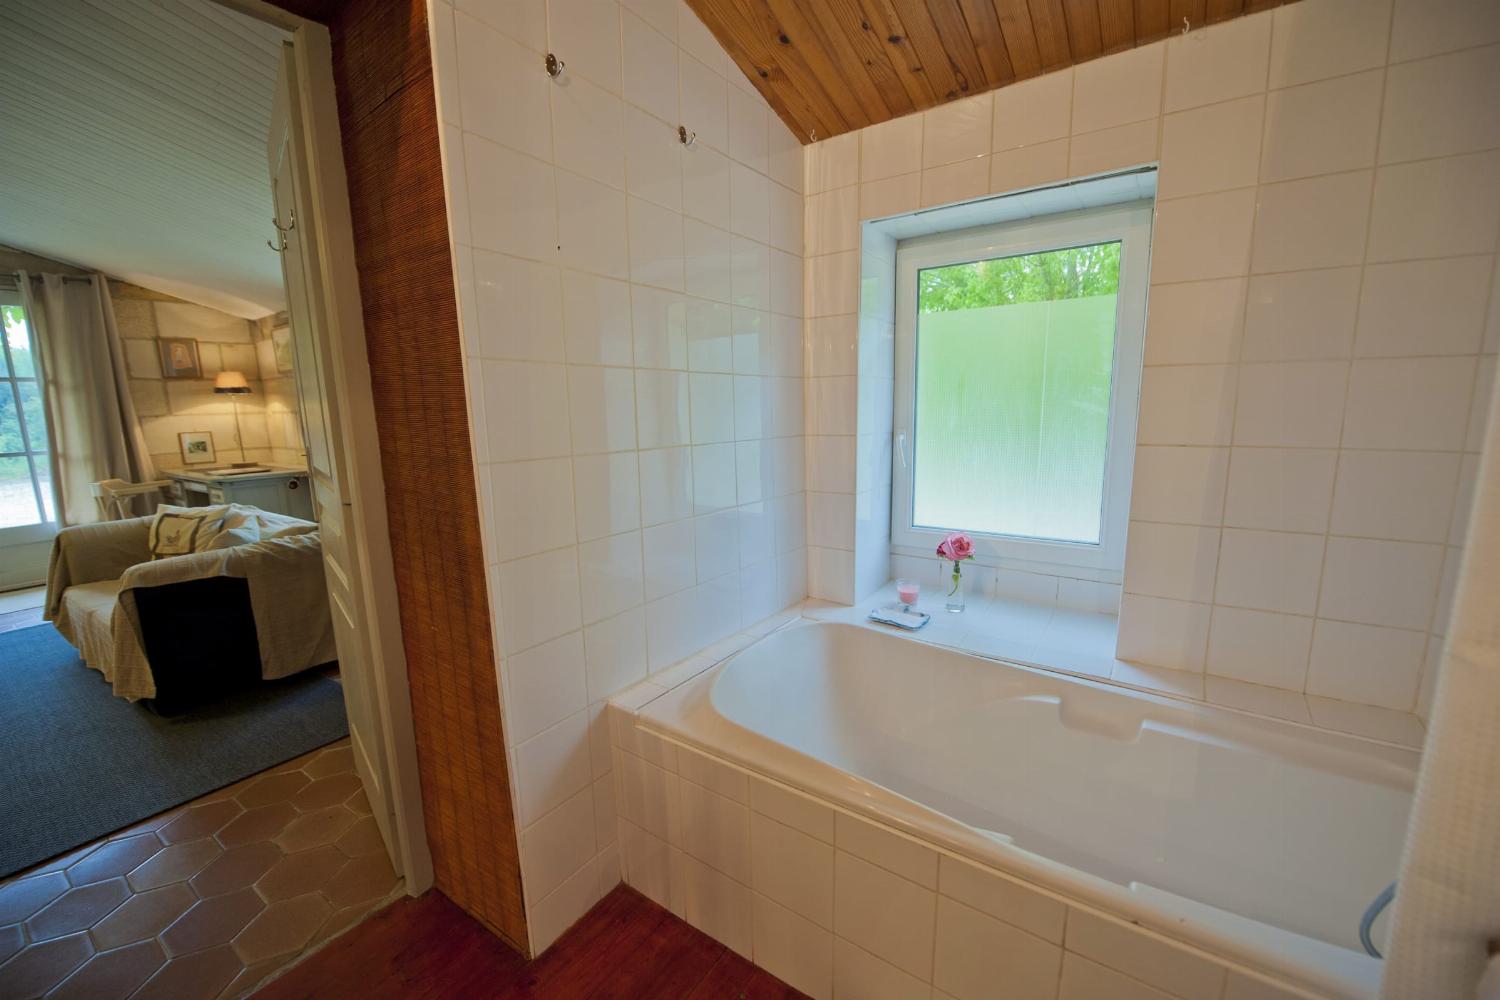 Bathroom | Rental home in Gironde